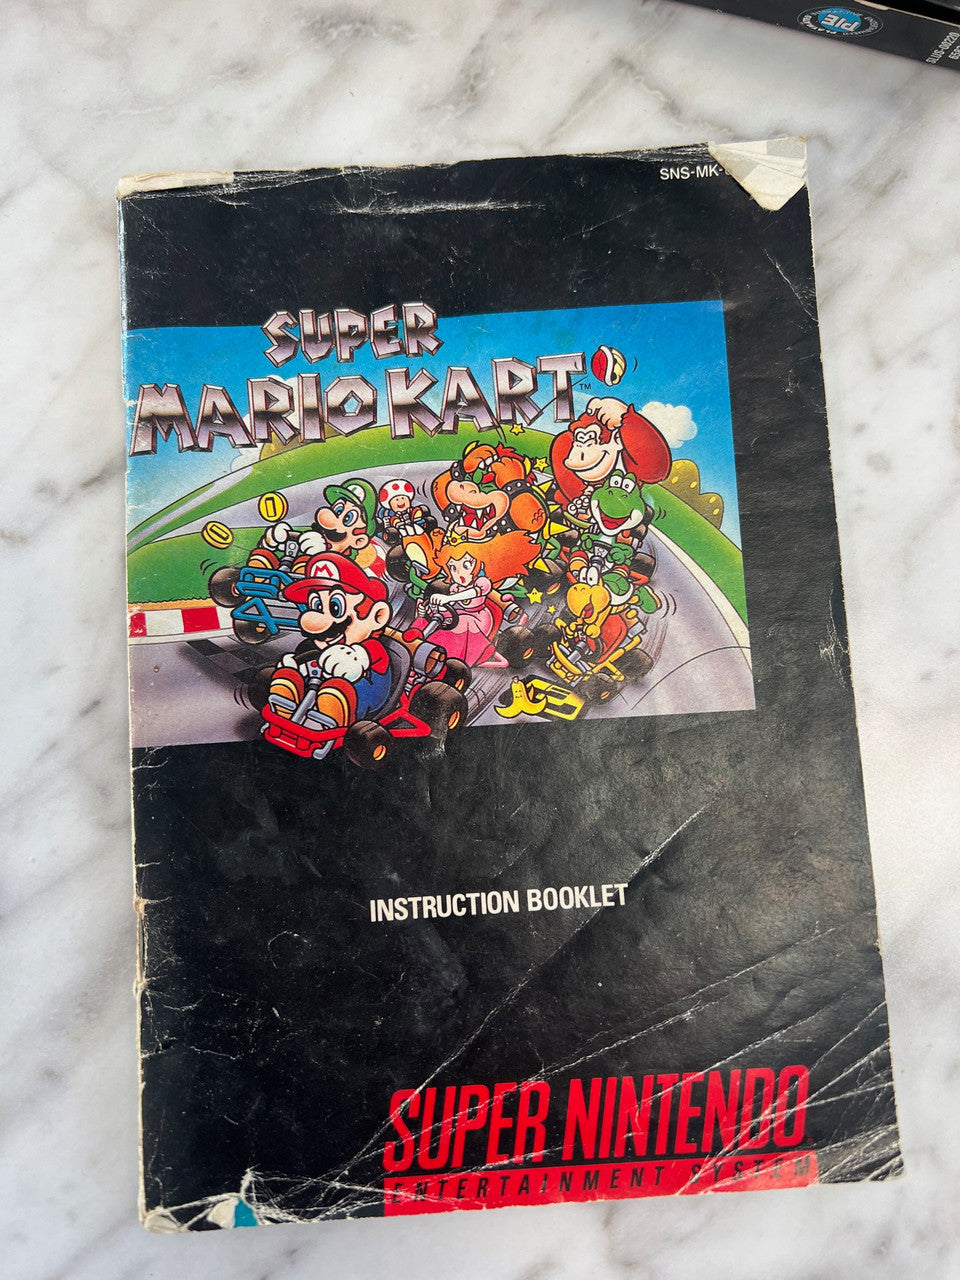 Super Mario Kart SNES Super Nintendo Manual only worn